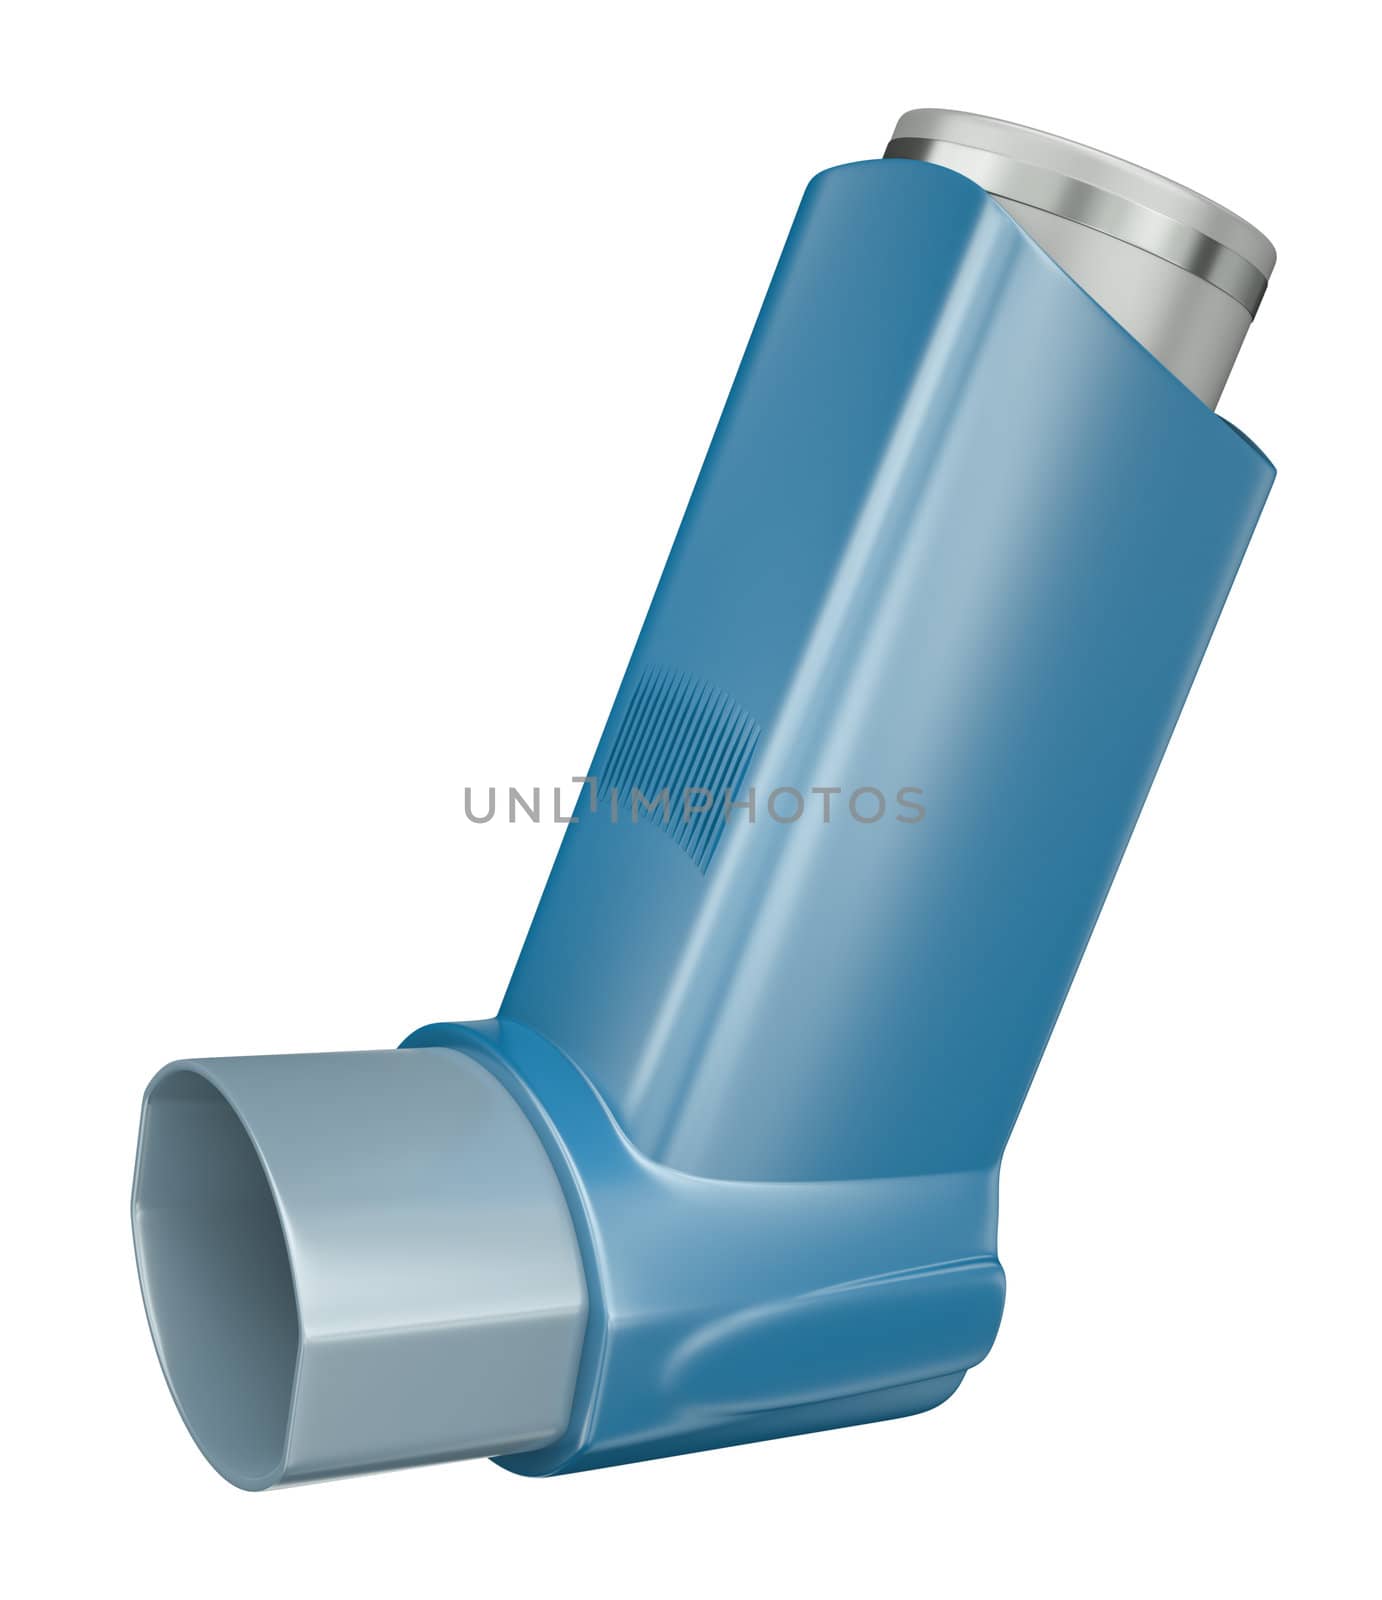 Blue medicine inhaler isolated on white background. 3D render.